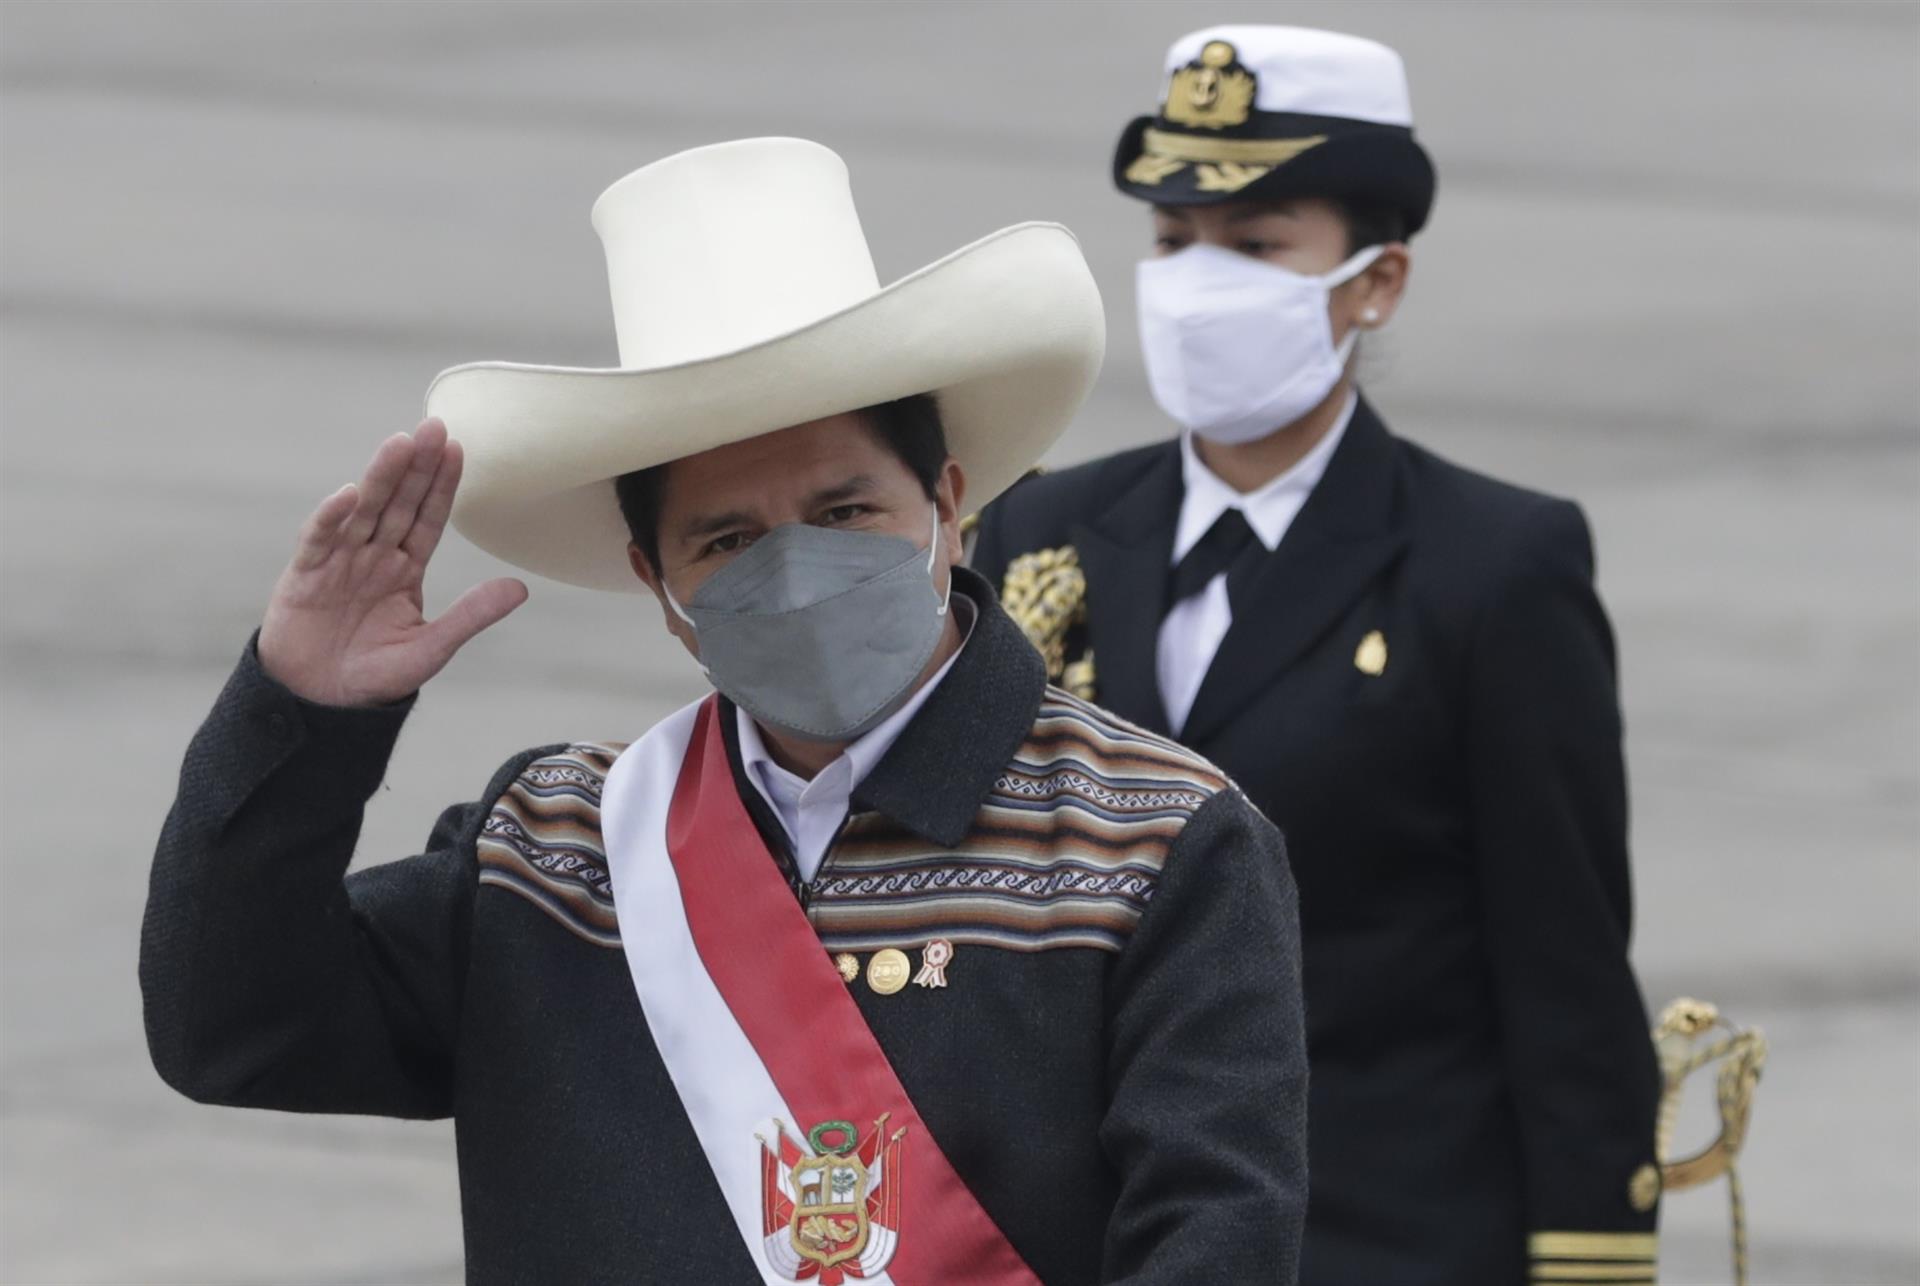 Abren investigación al presidente de Perú por presunto tráfico de influencias